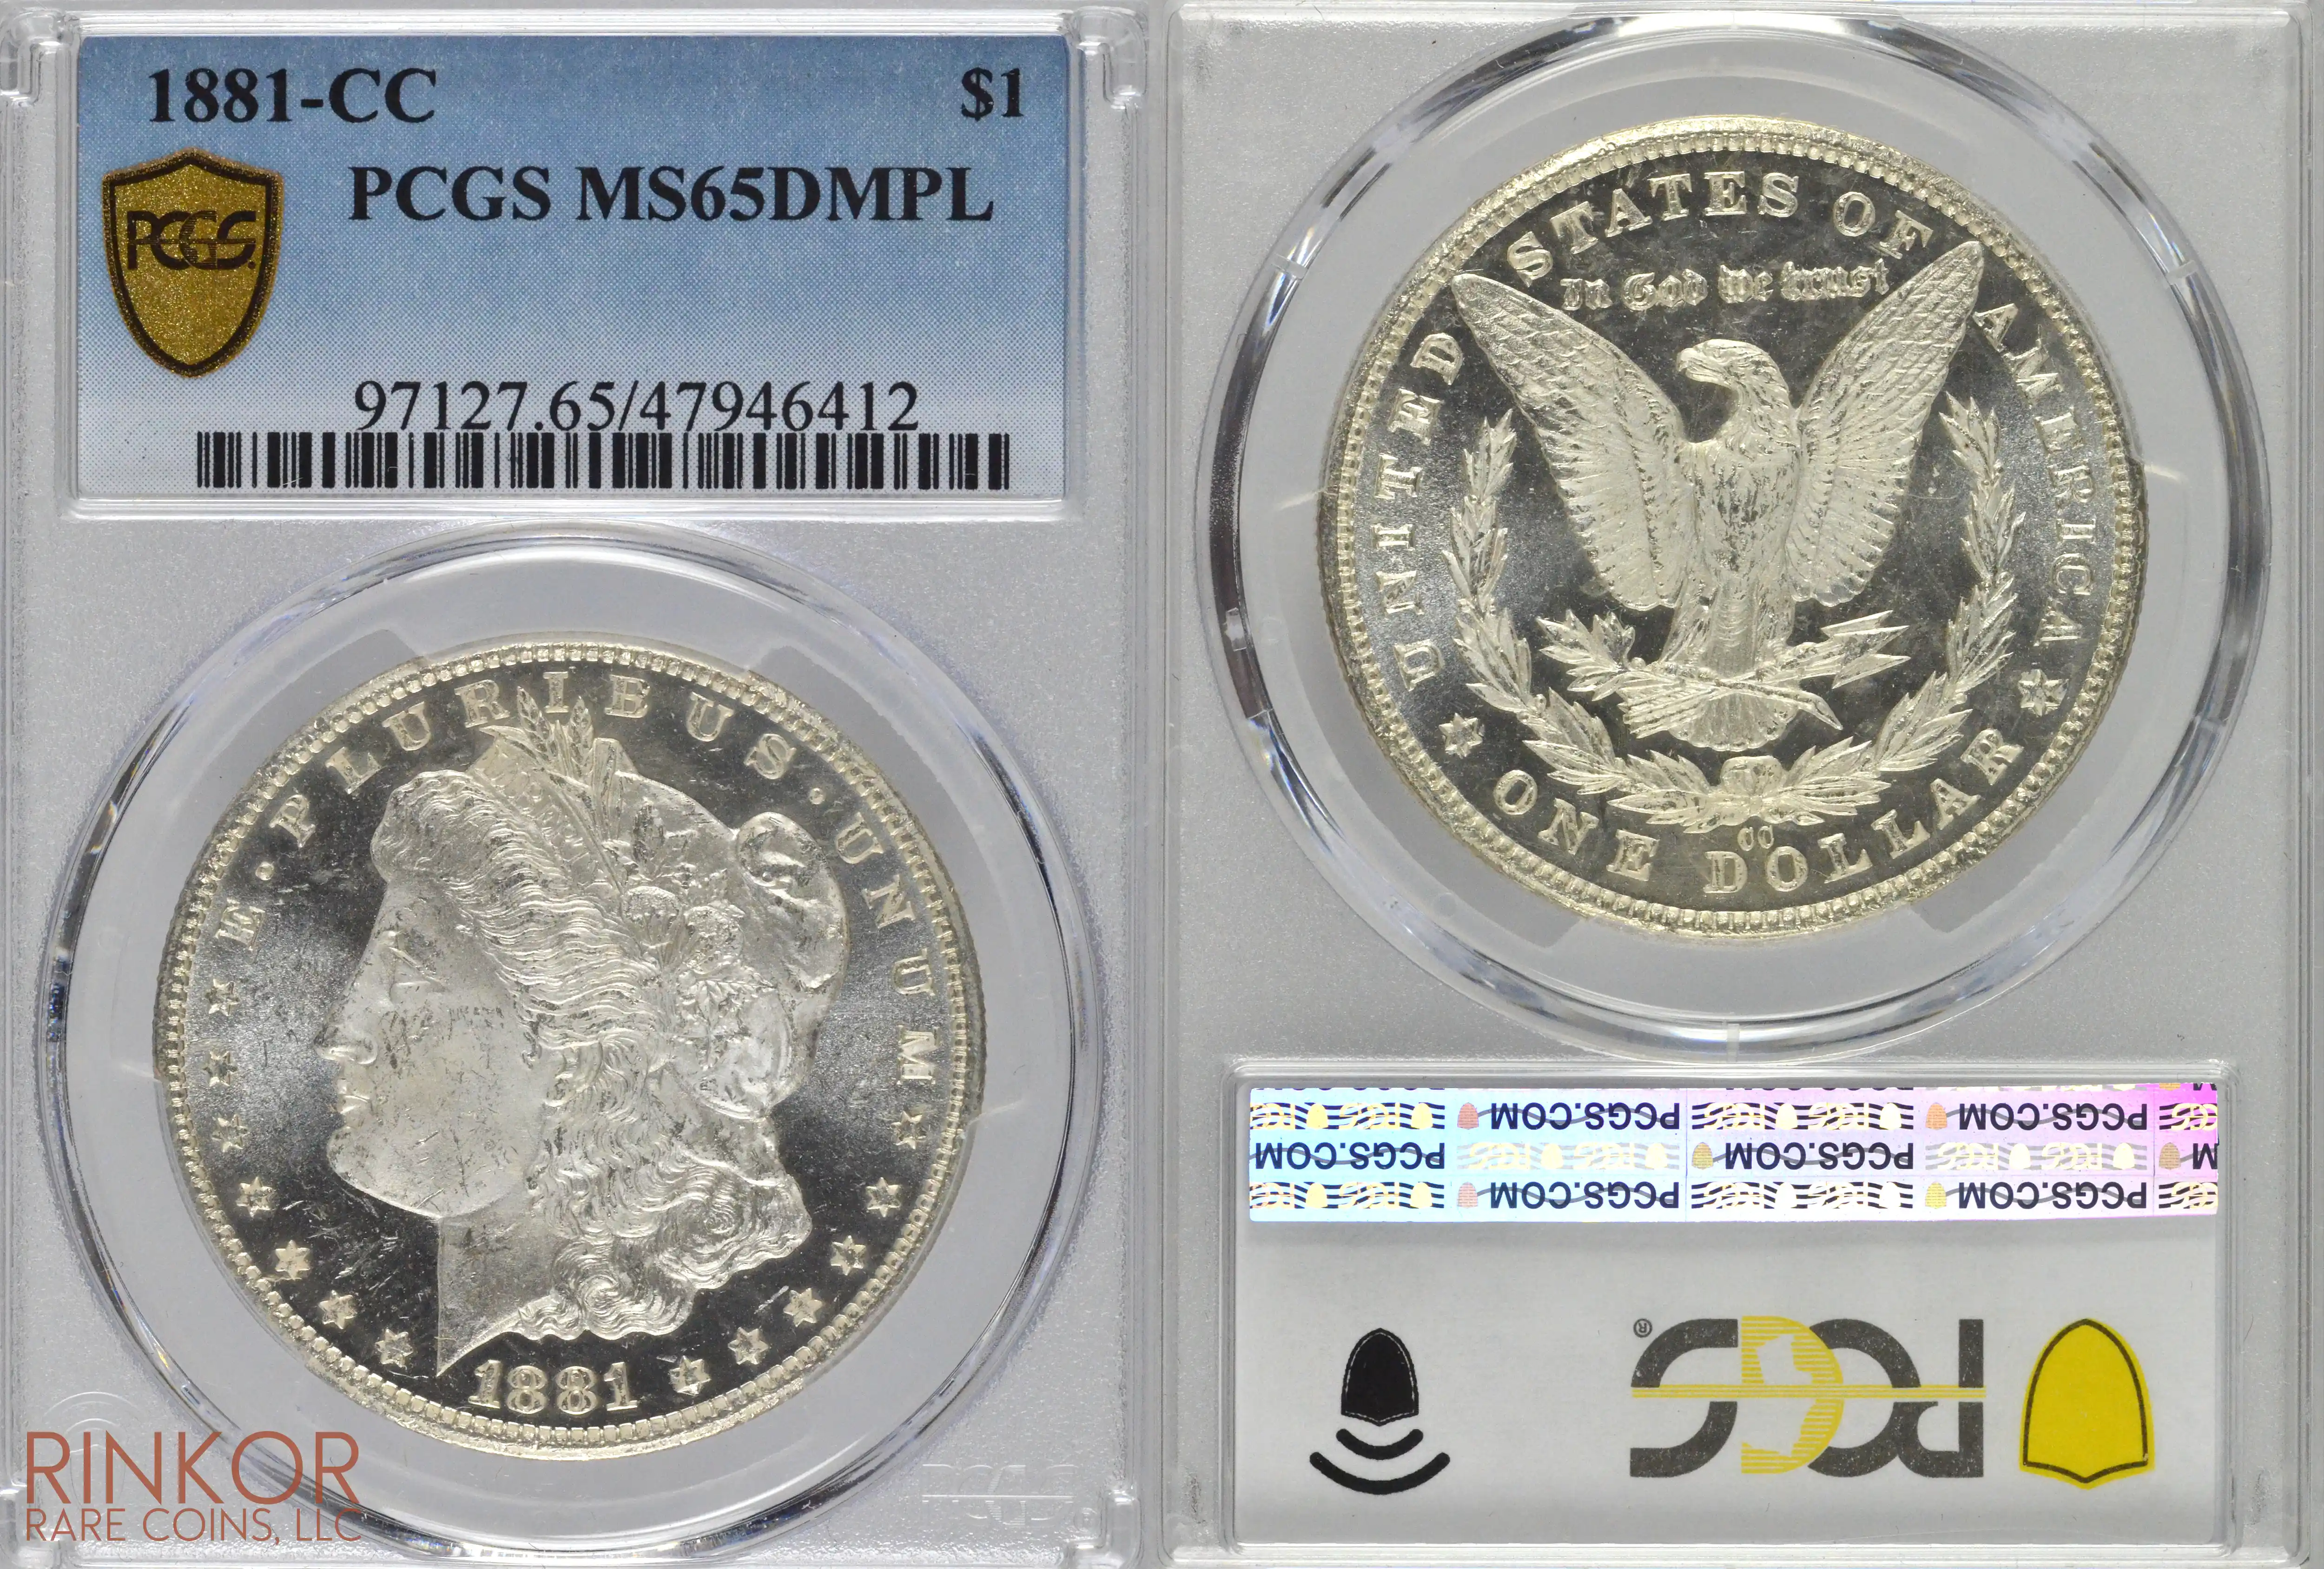 1881-CC $1 PCGS MS 65 DMPL 